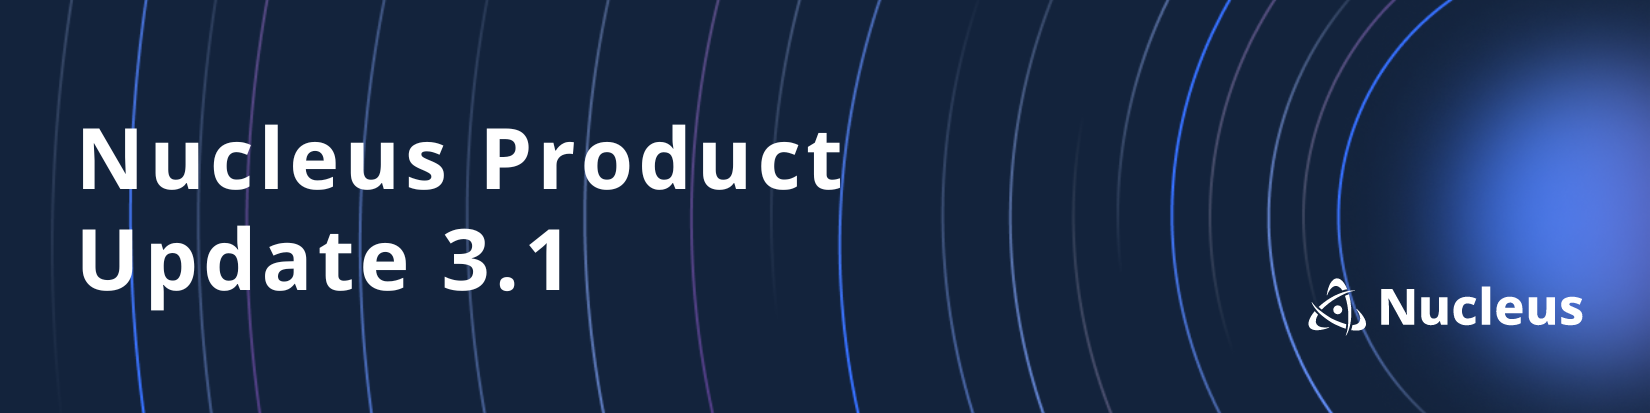 Nucleus Product Update 3.1